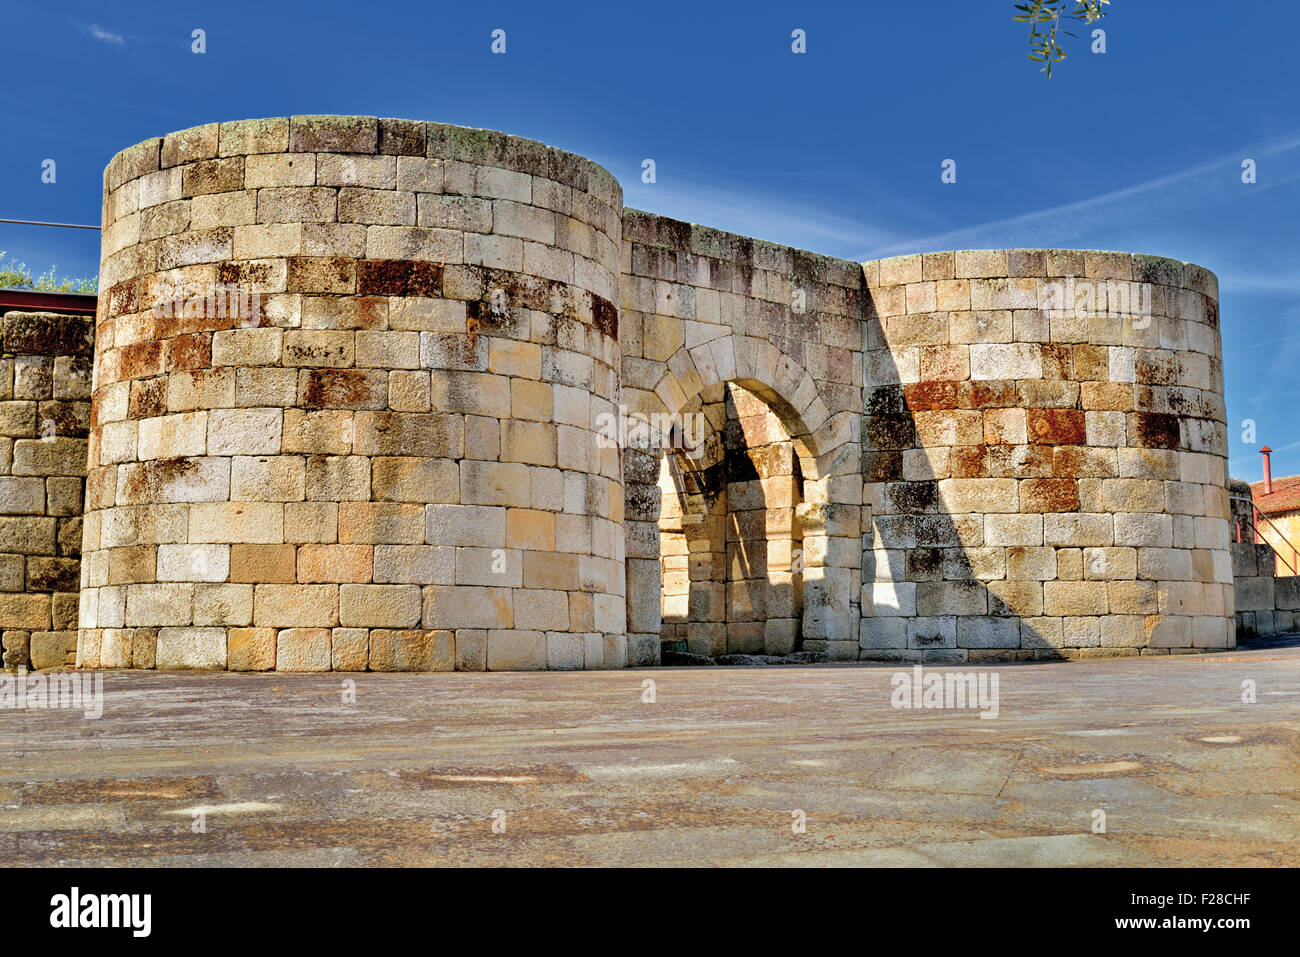 Portugal: Historic gateway of the former roman wall (4th century) in Idanha-a-Velha Stock Photo